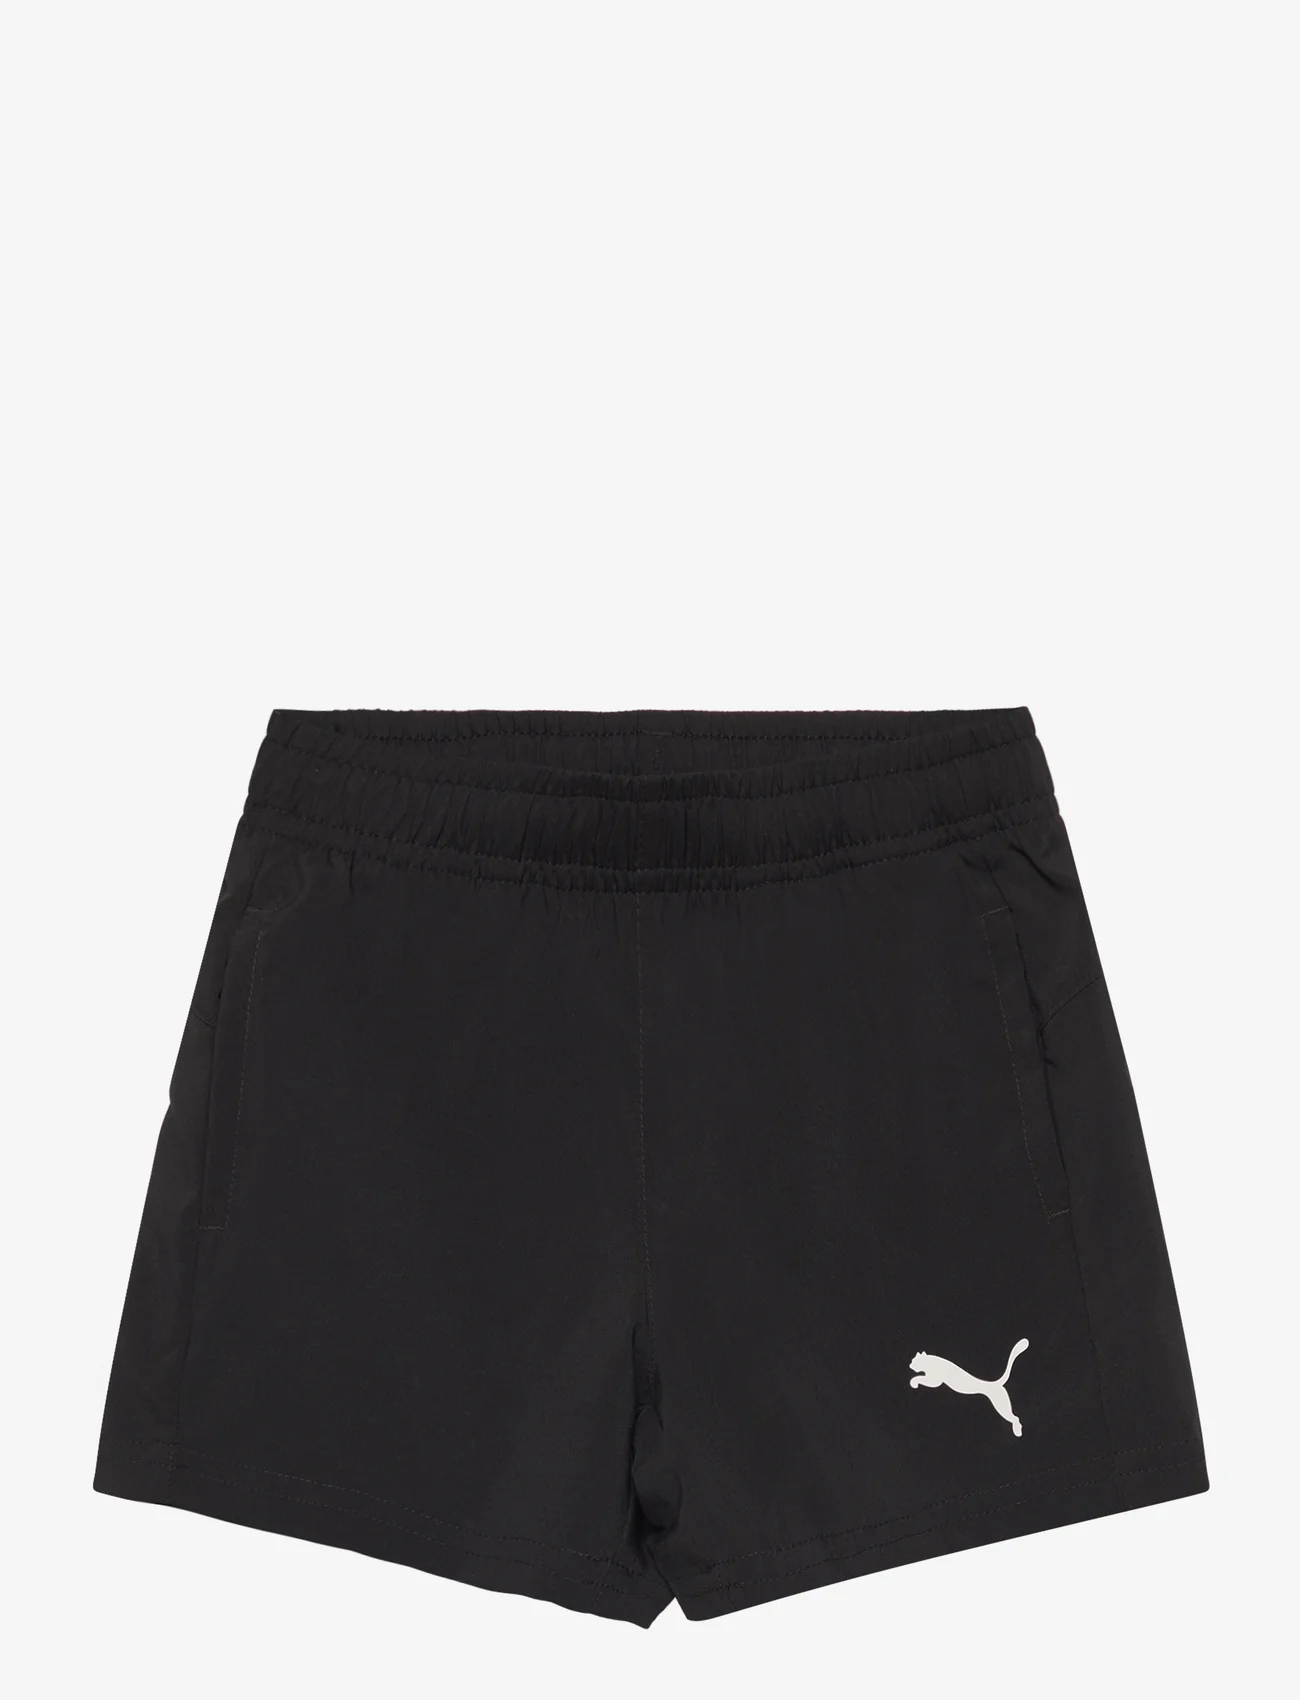 PUMA - ACTIVE Woven Shorts B - sport-shorts - puma black - 0